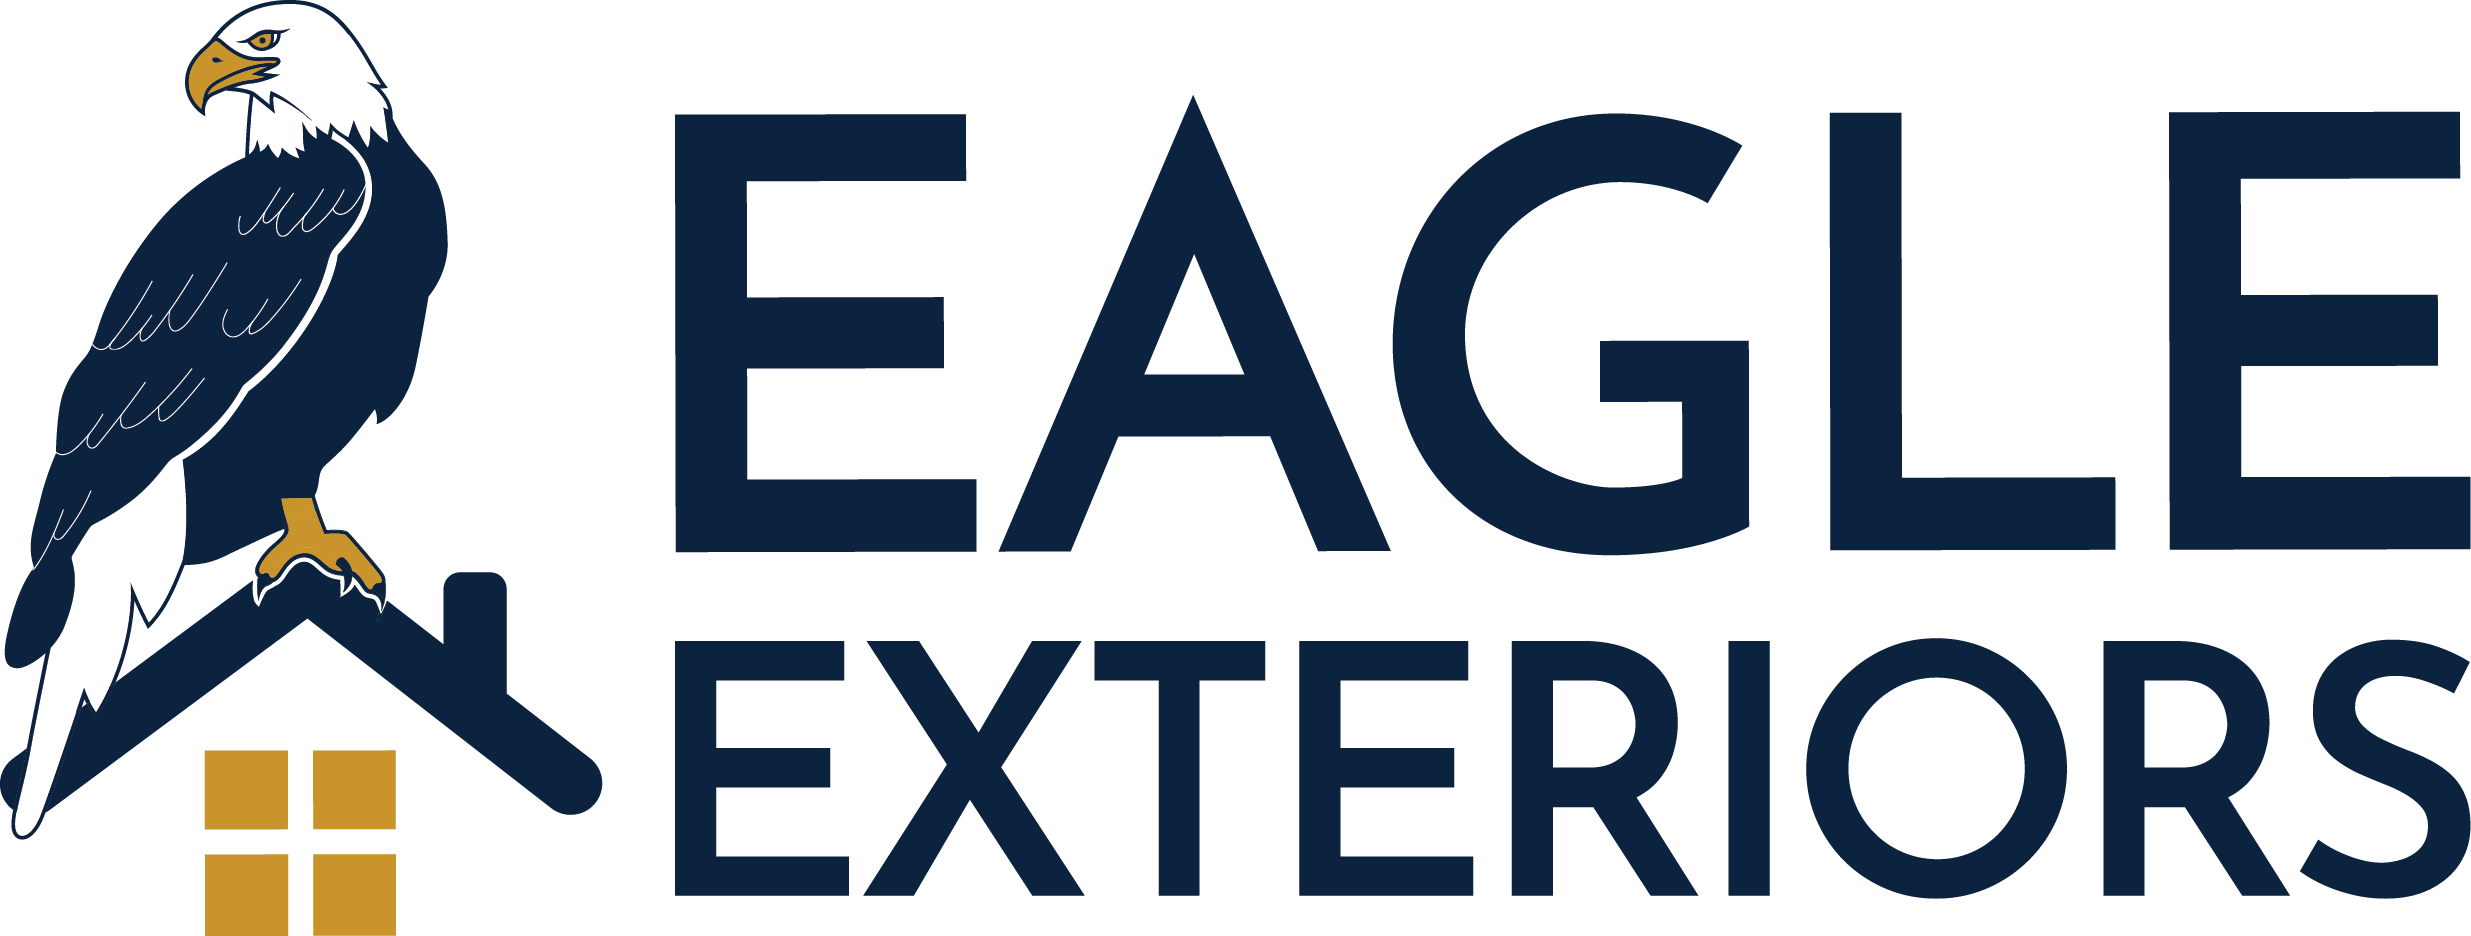 Eagle Exteriors logo